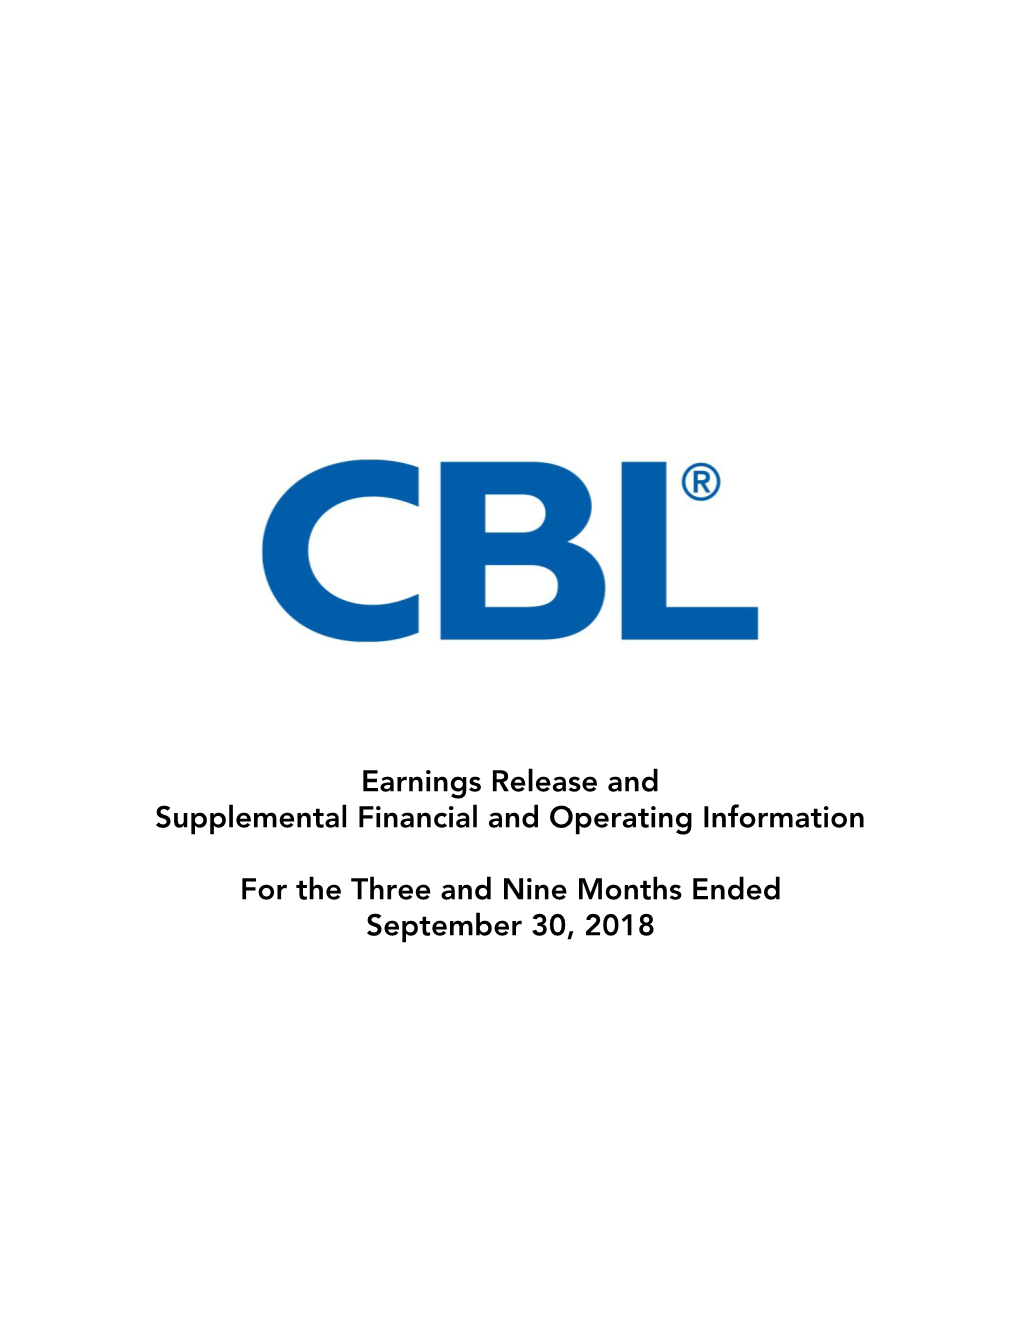 CBL-9.30.2018 ER & Supplemental